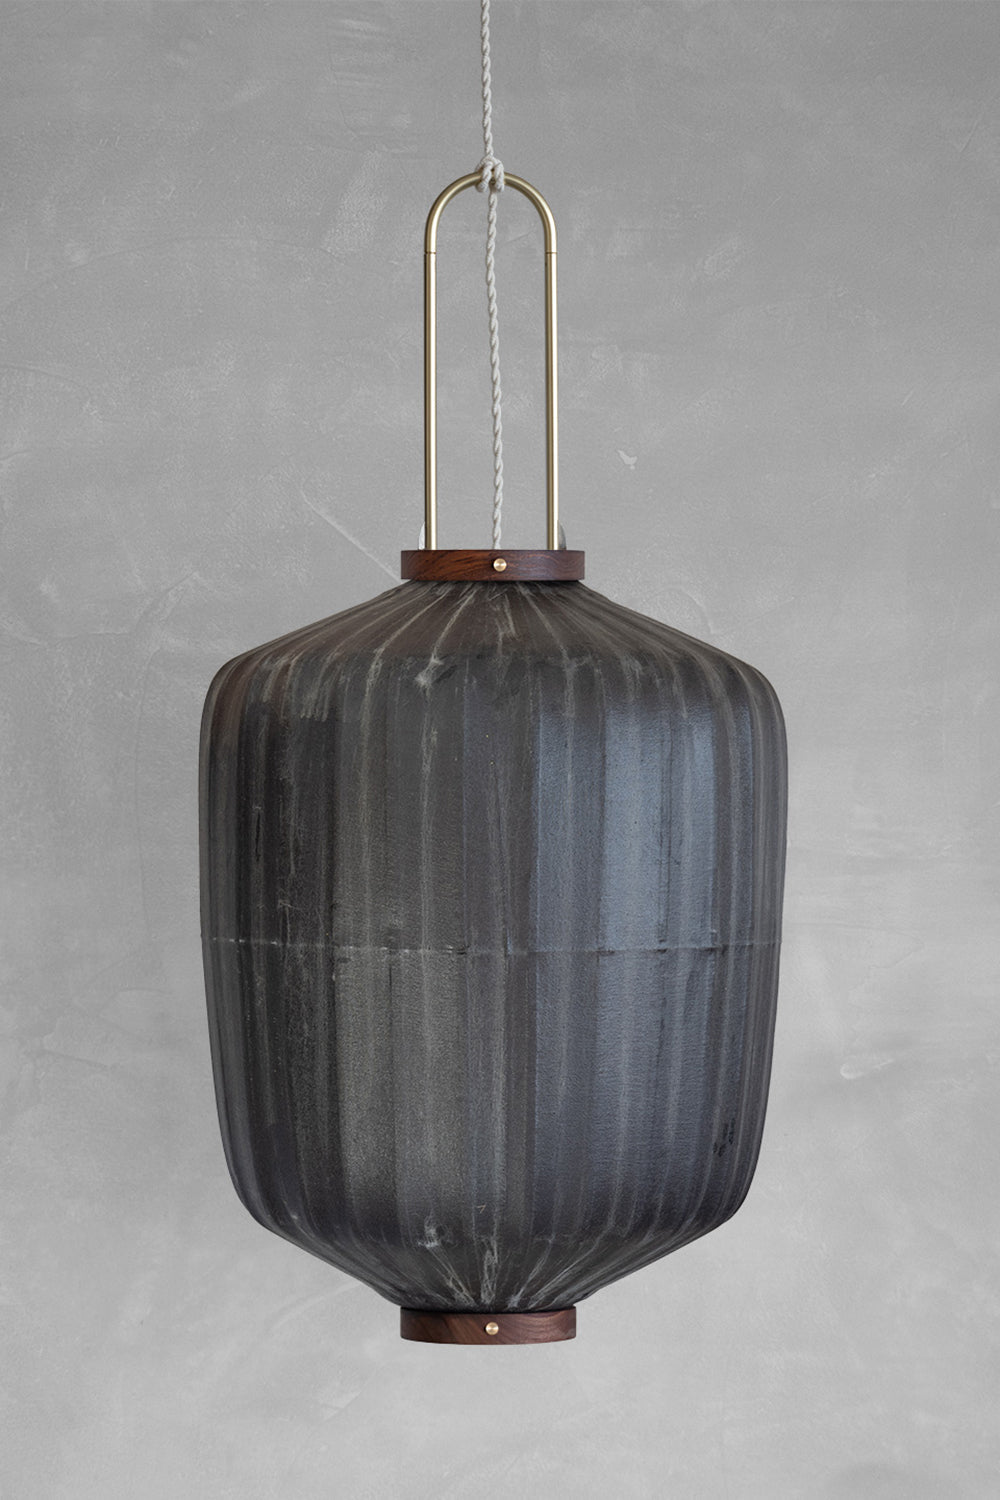 The bucket shaped version of the Heritage Lantern Black XL by Taiwan Lantern.